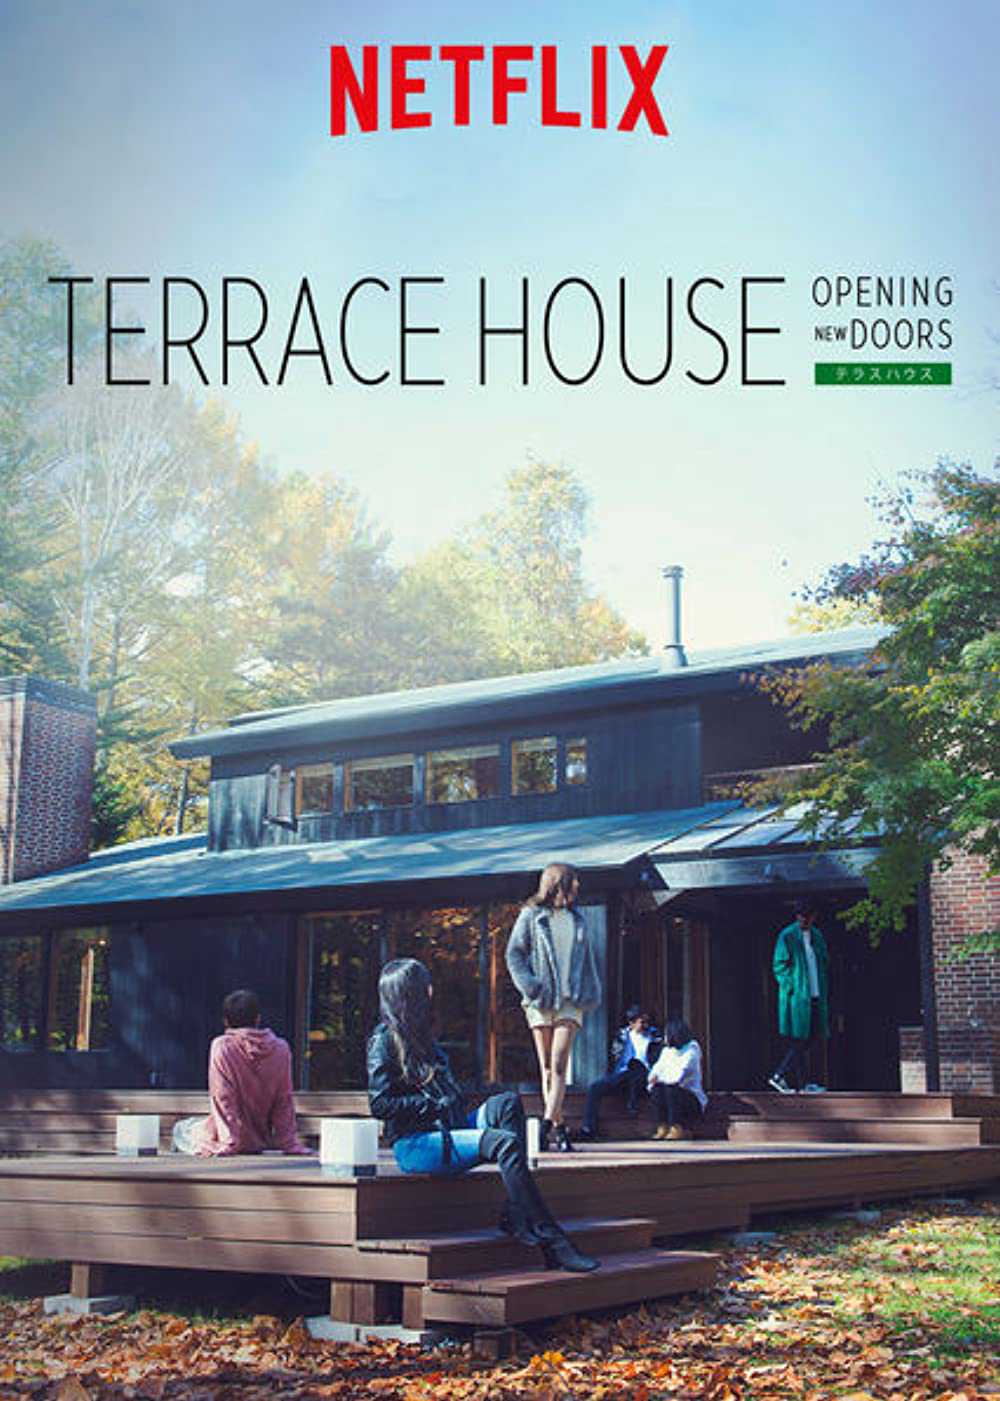 Terrace house: chân trời mới (phần 1) - Terrace house: opening new doors (season 1)